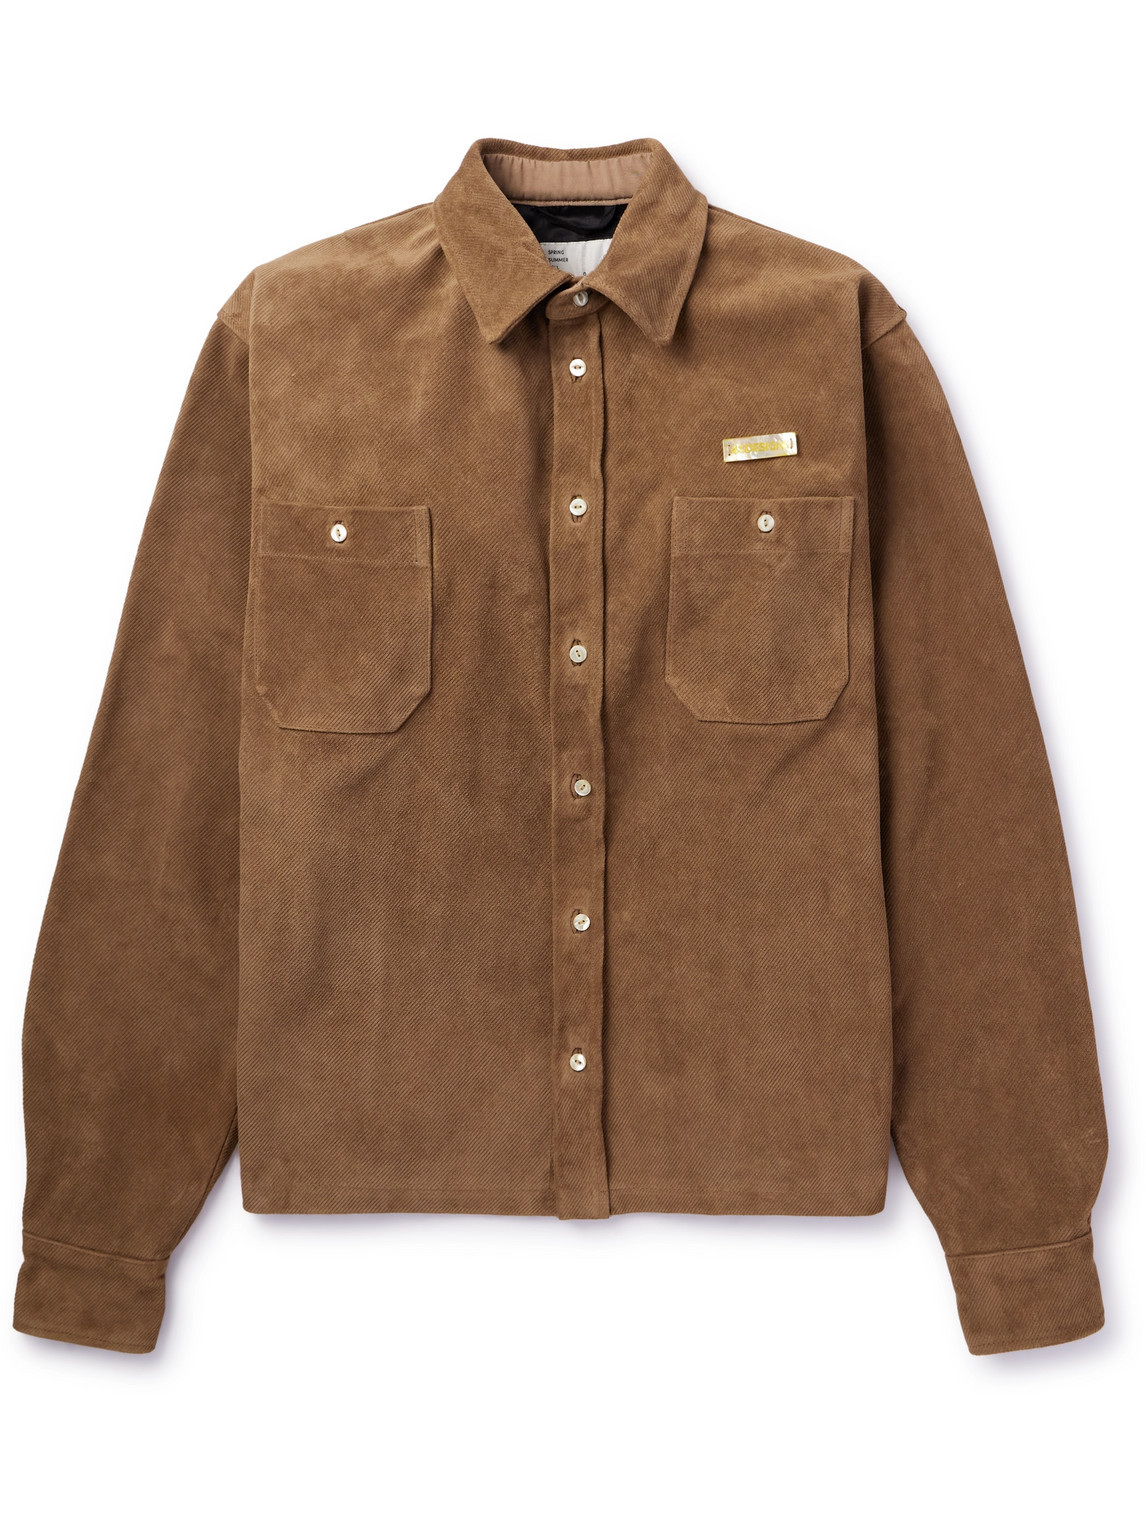 4SDesigns - Throwing Fits Logo-Appliquéd Leather-Corduroy Shirt - Men - Brown - M von 4SDesigns